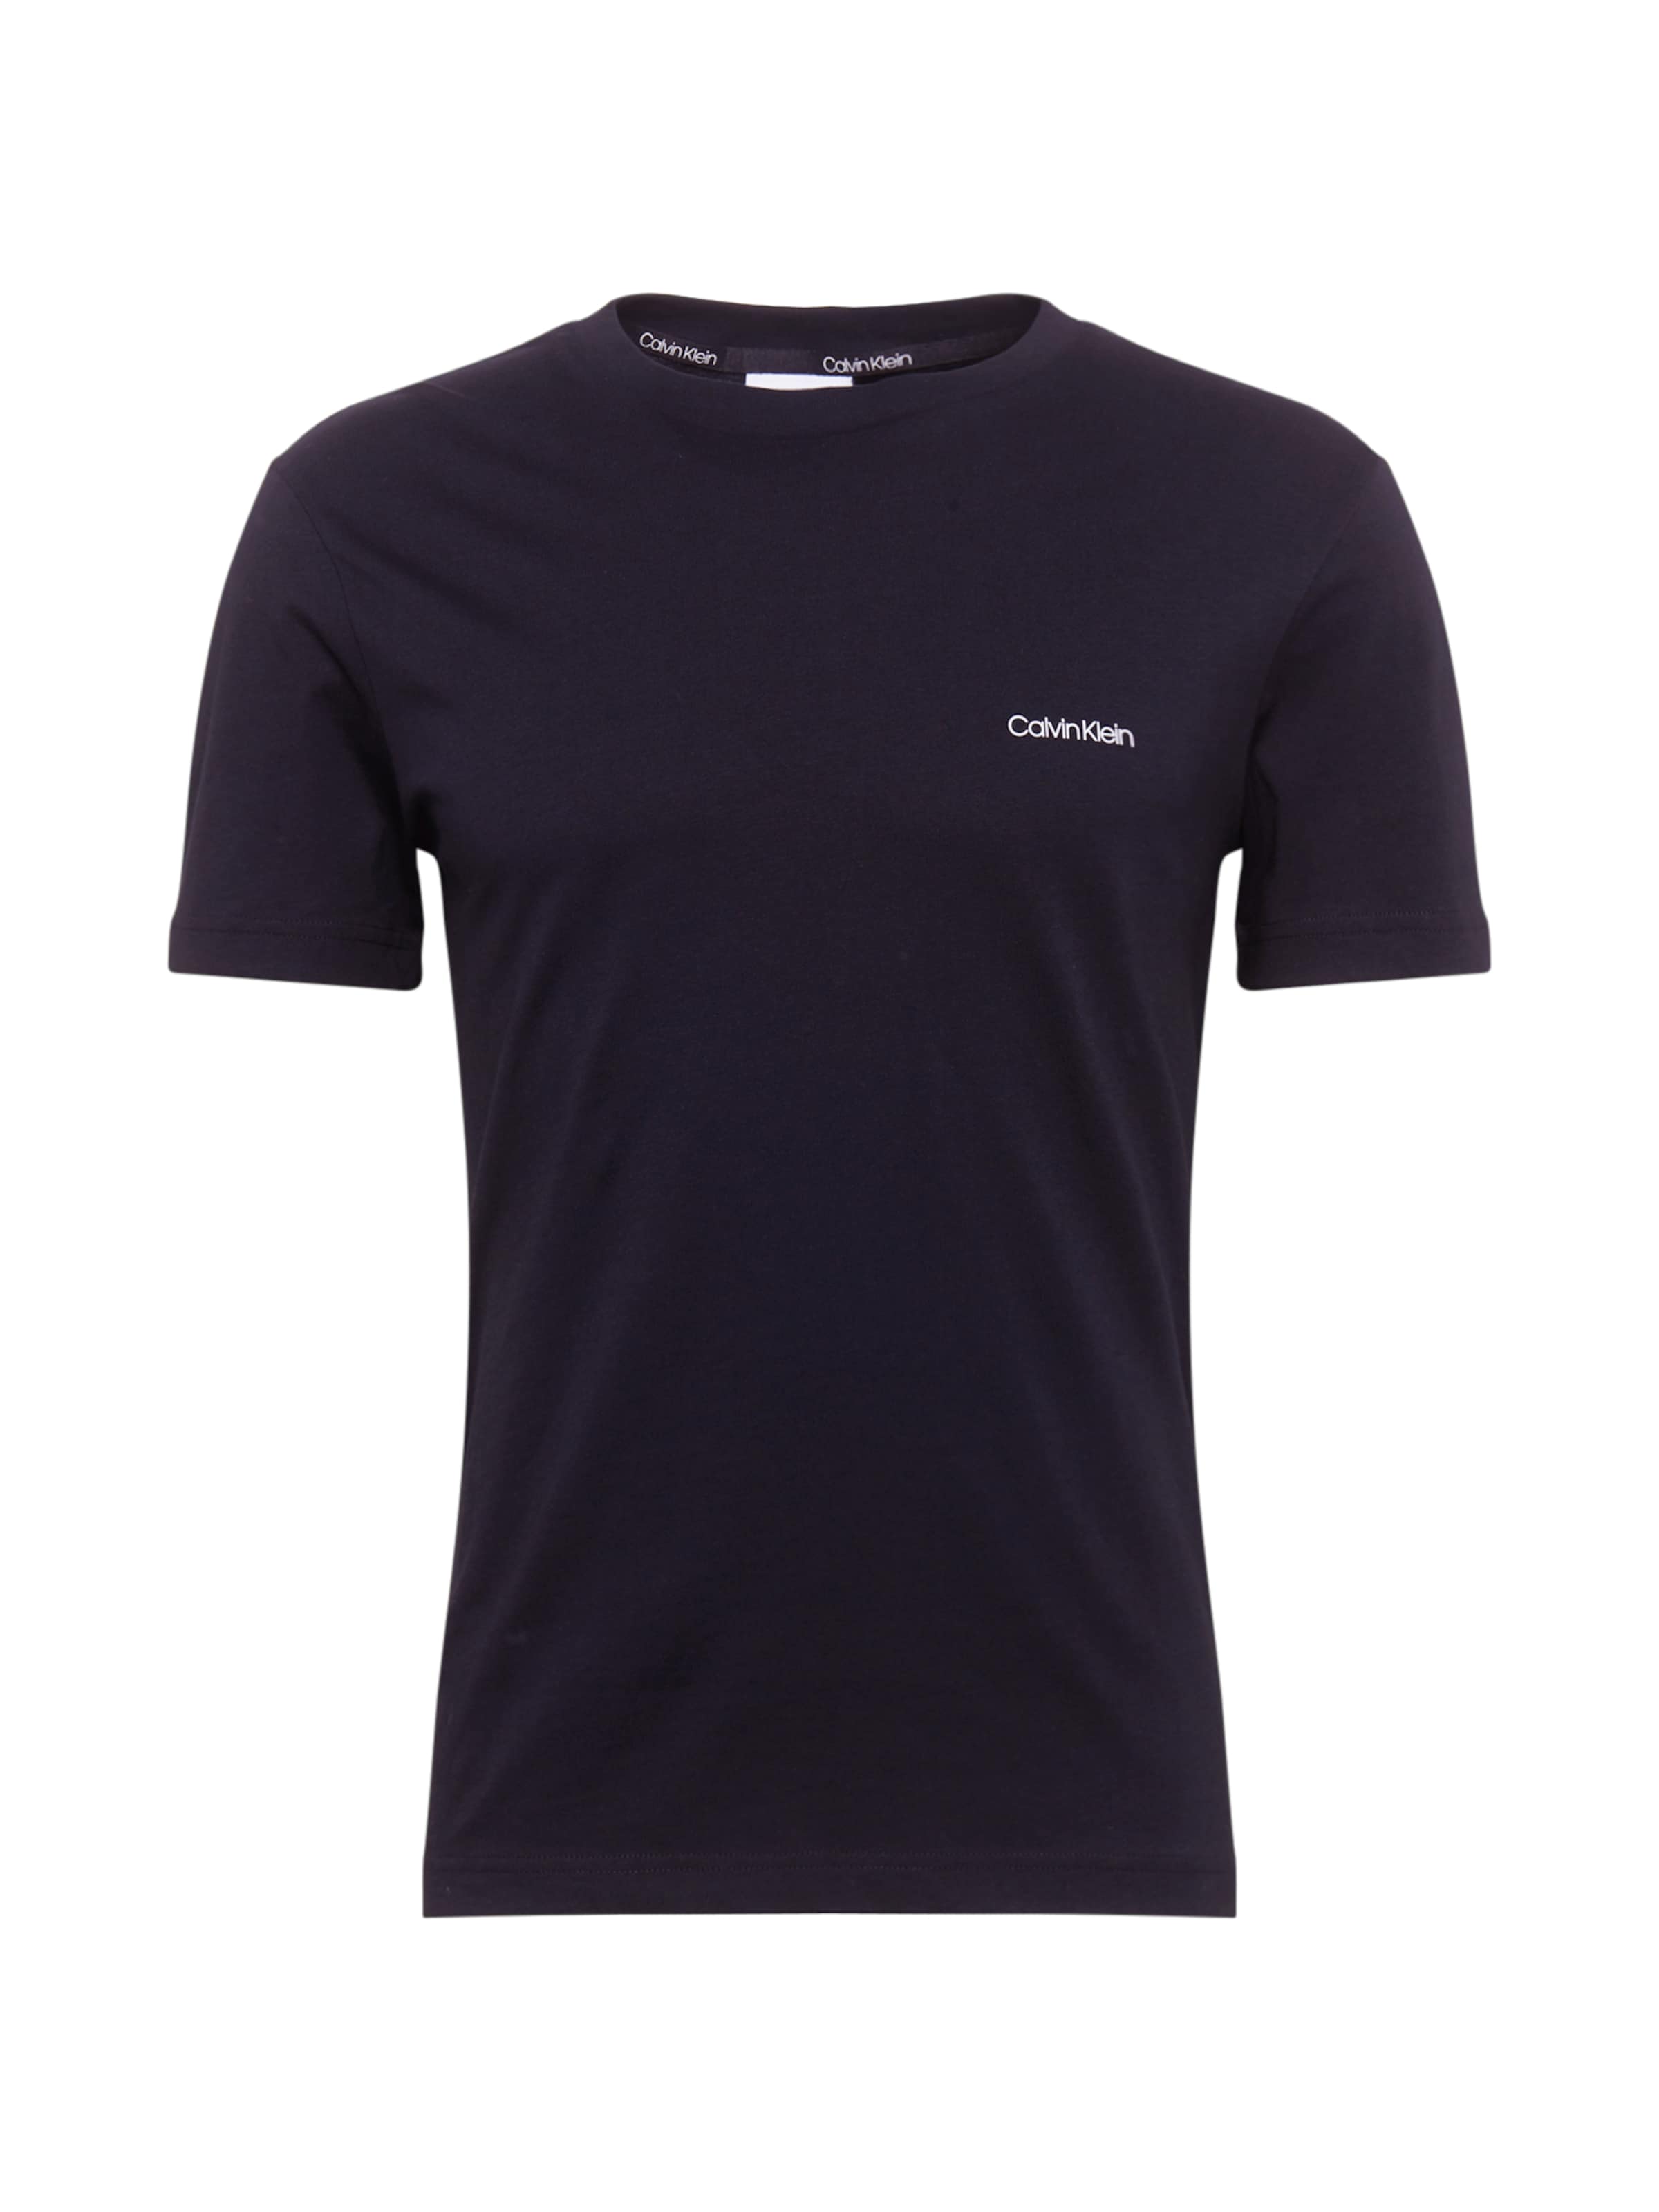 Men T-shirts | Calvin Klein Shirt in Black - DK42821